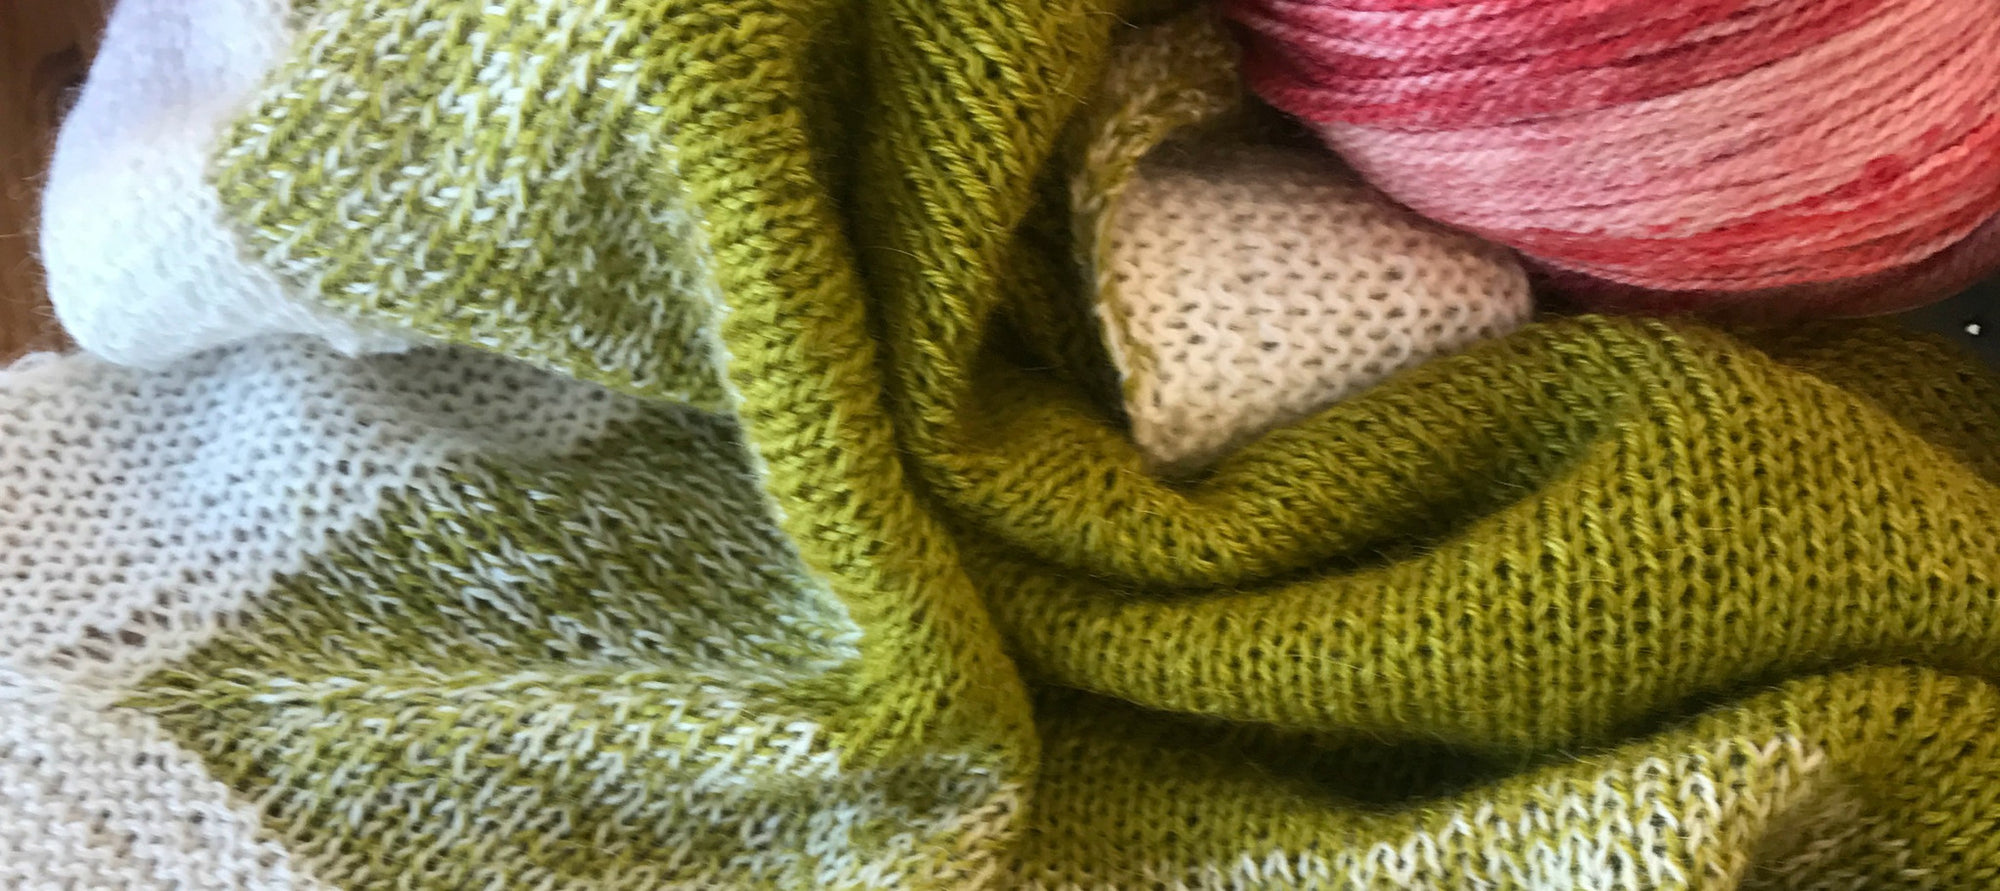 Spring knitting patterns: The Spring Kerchief